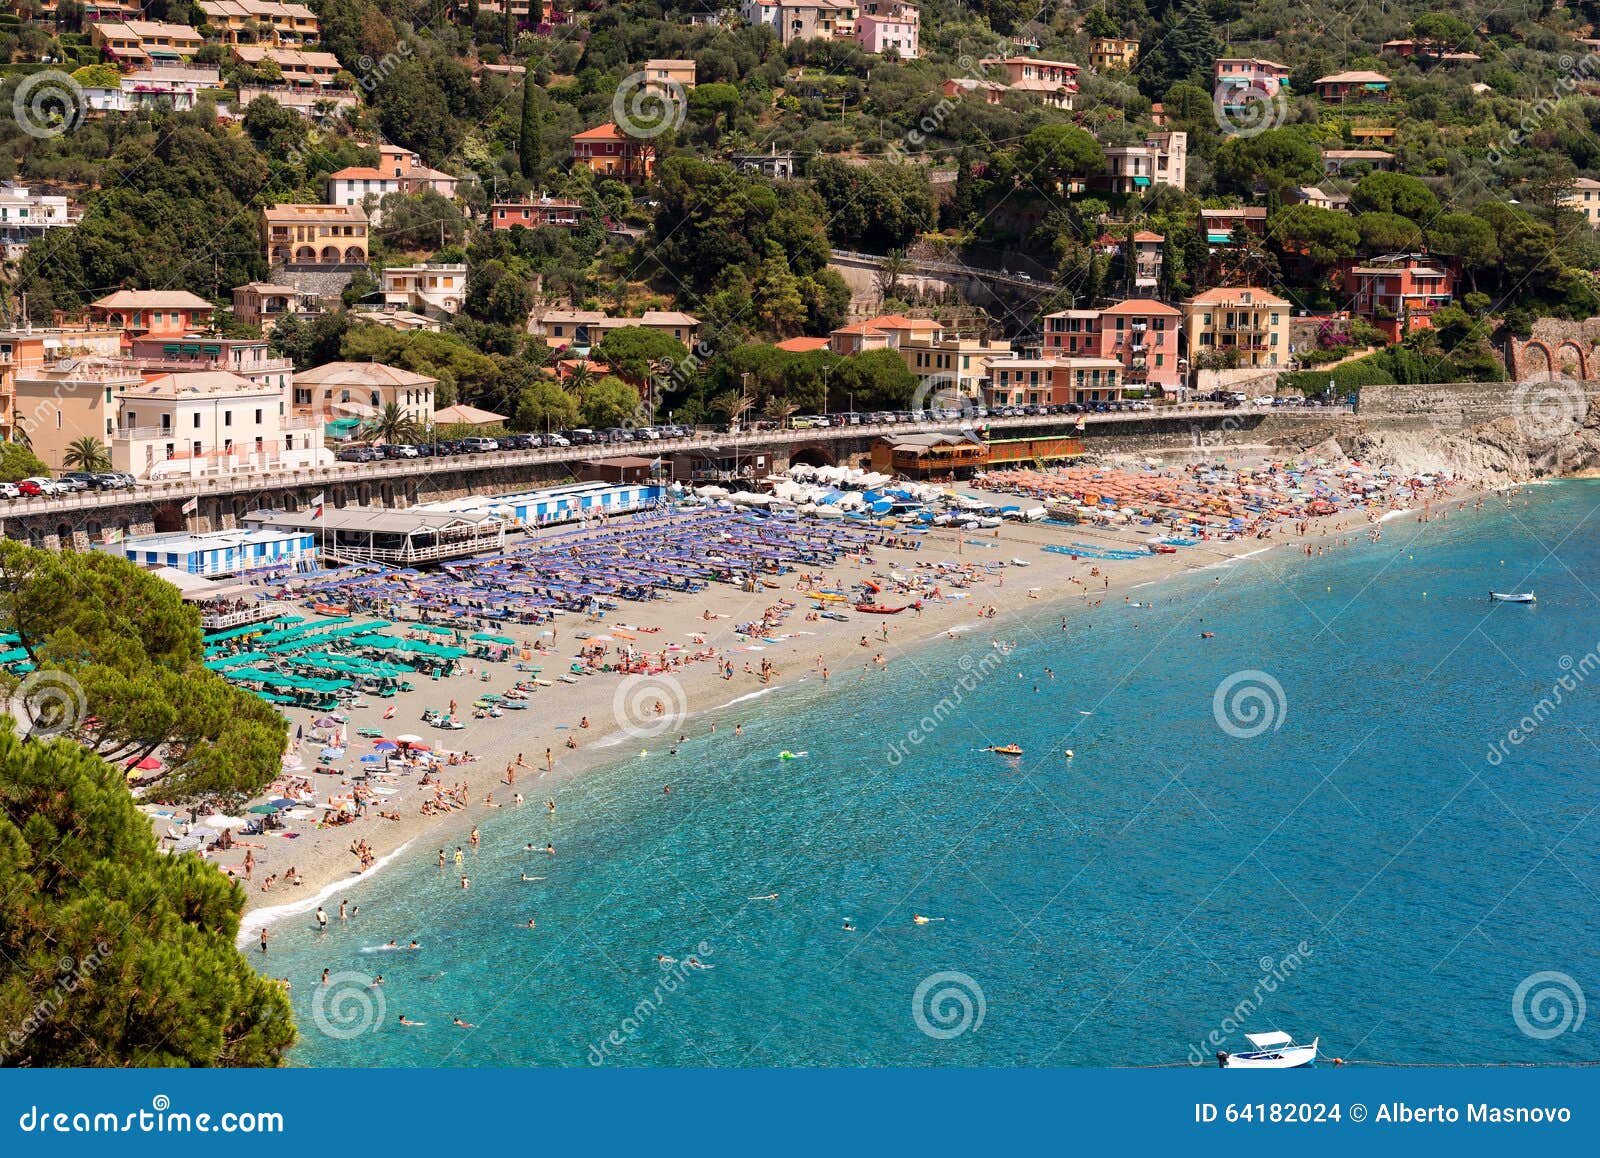 Bonassola Beach Liguria Italy Stock Photo Image Of Crowded Blue